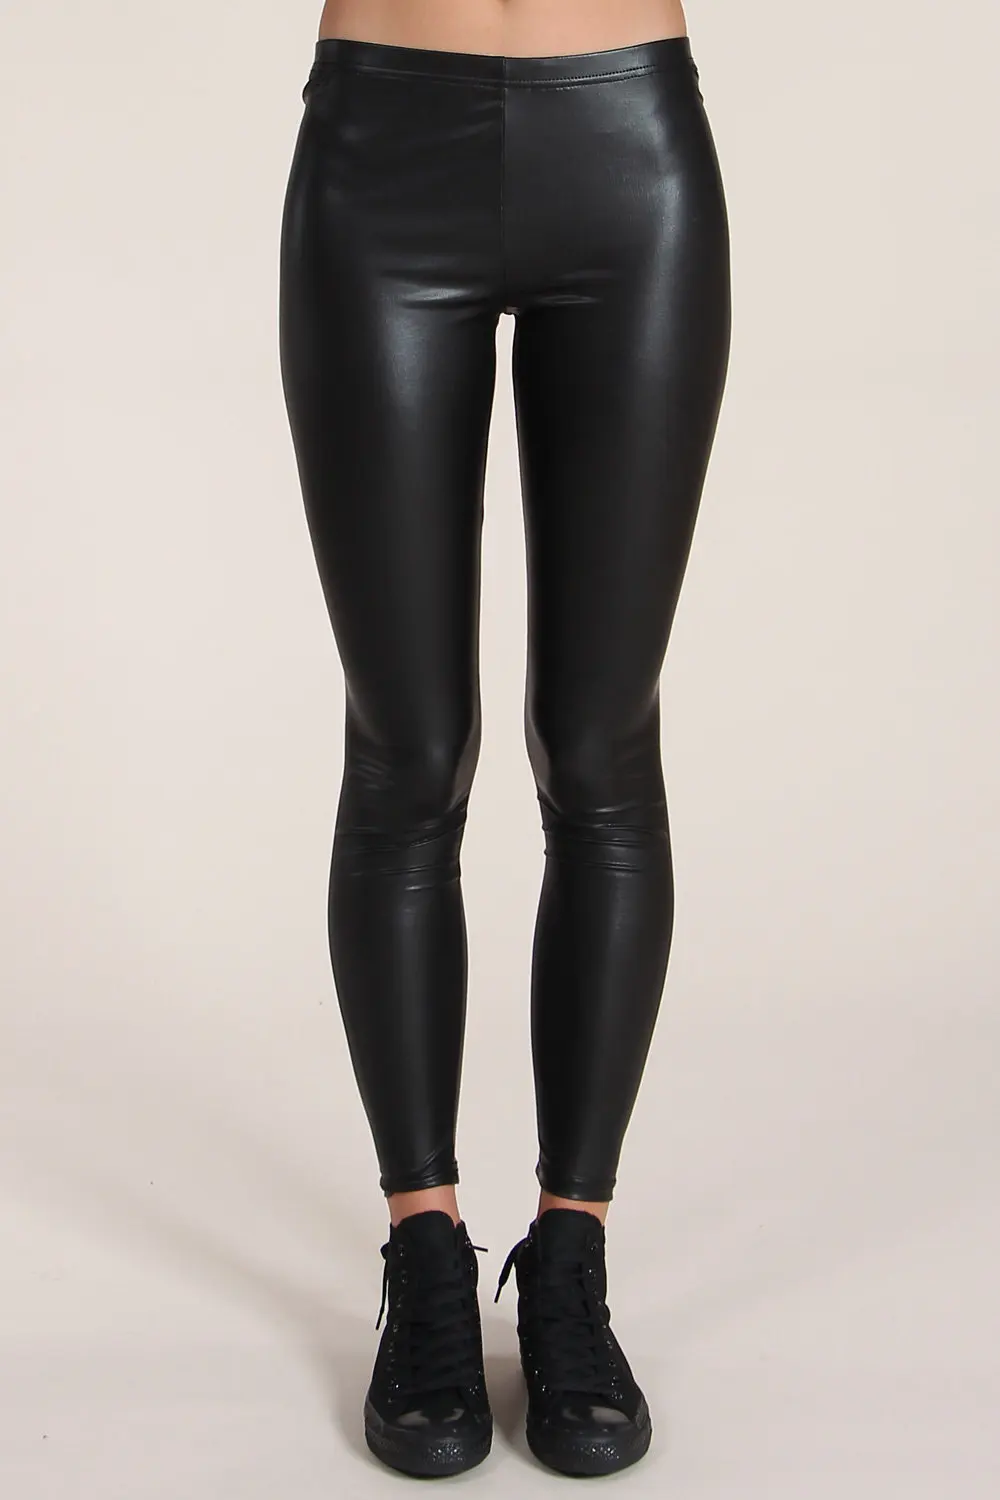 tight black leather pants